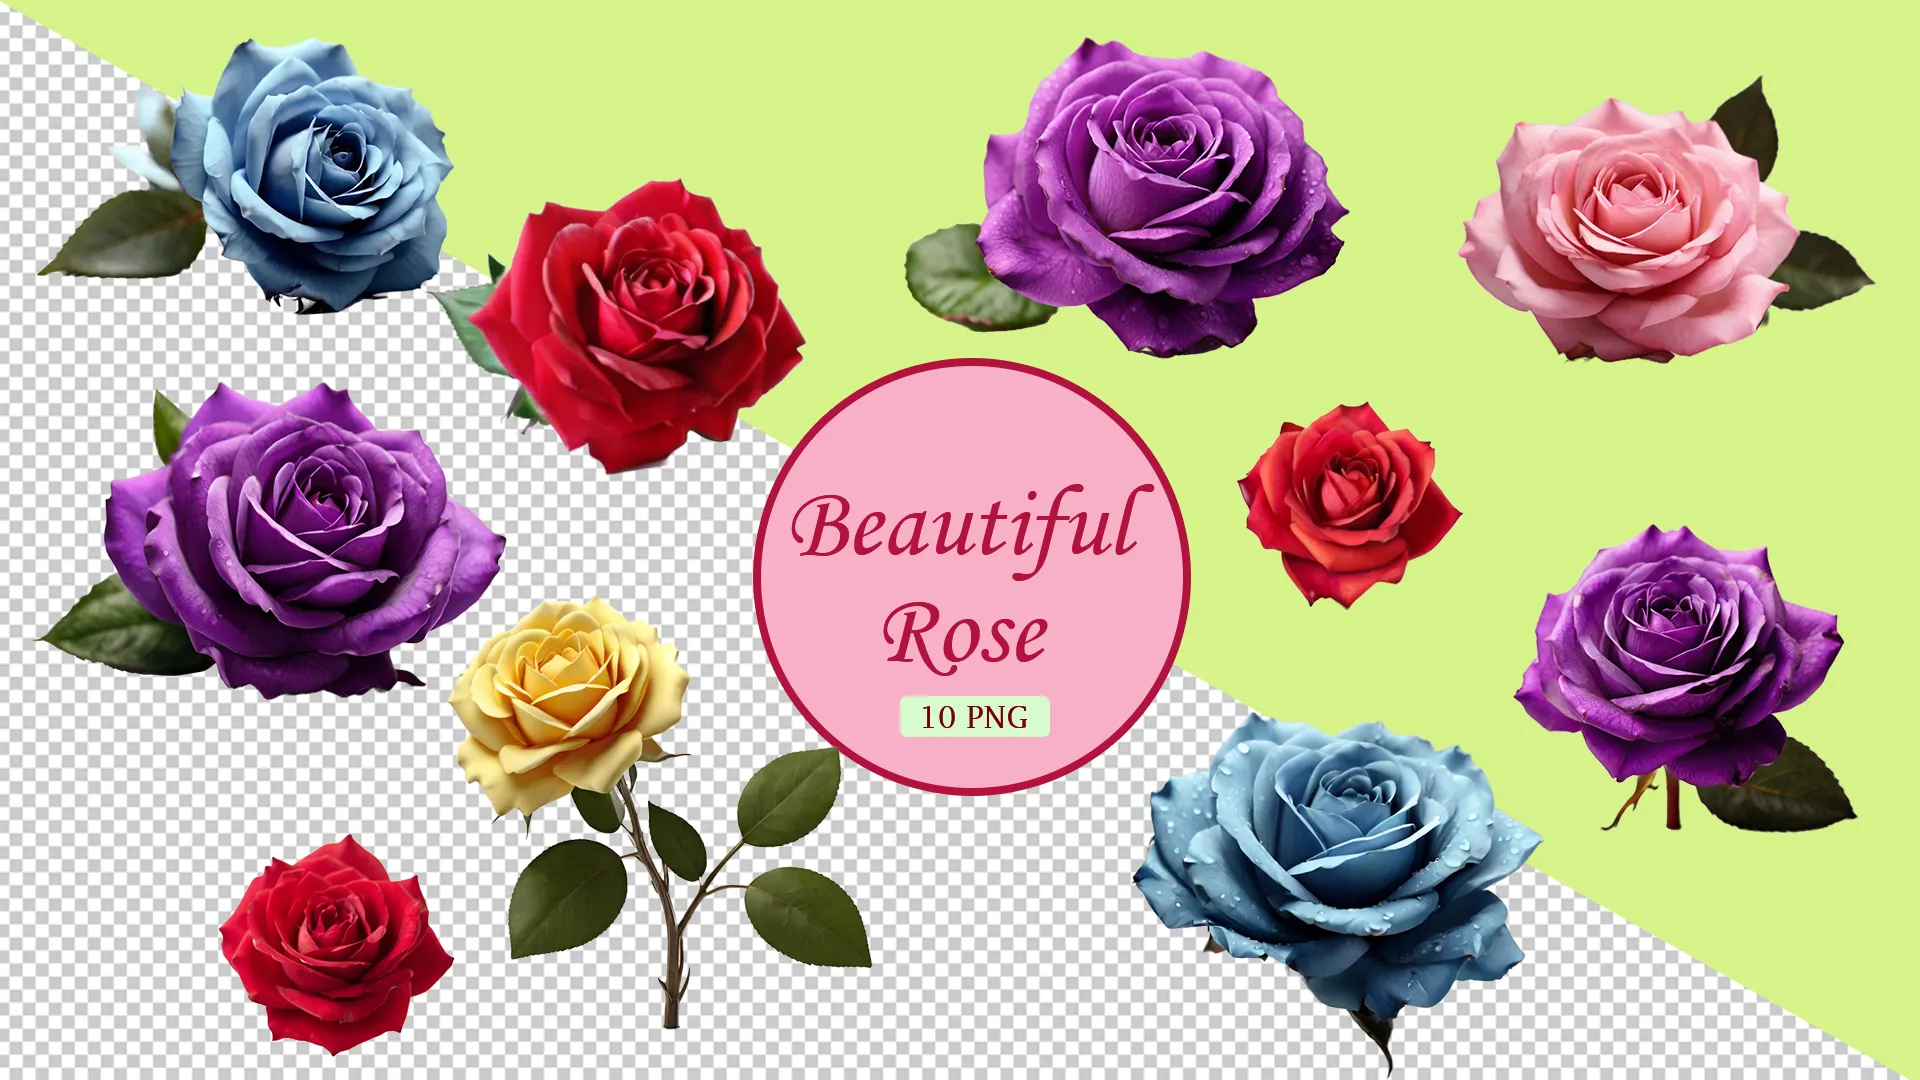 Beautiful Rose Varieties Pack